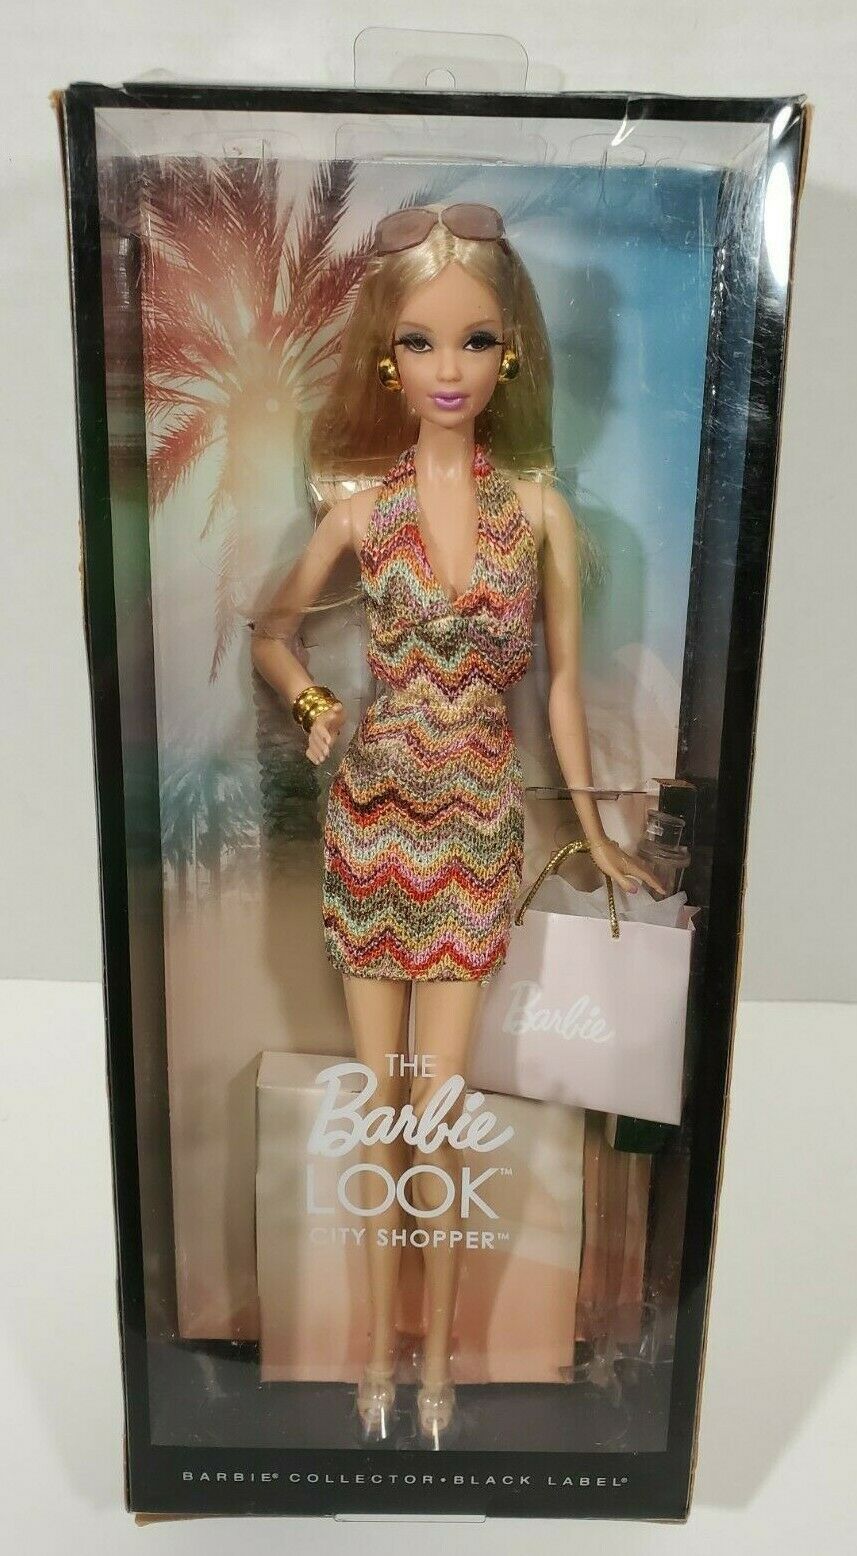 New 2012 The Barbie Look City Shopper Blonde Doll Black Label Mattel #x8256